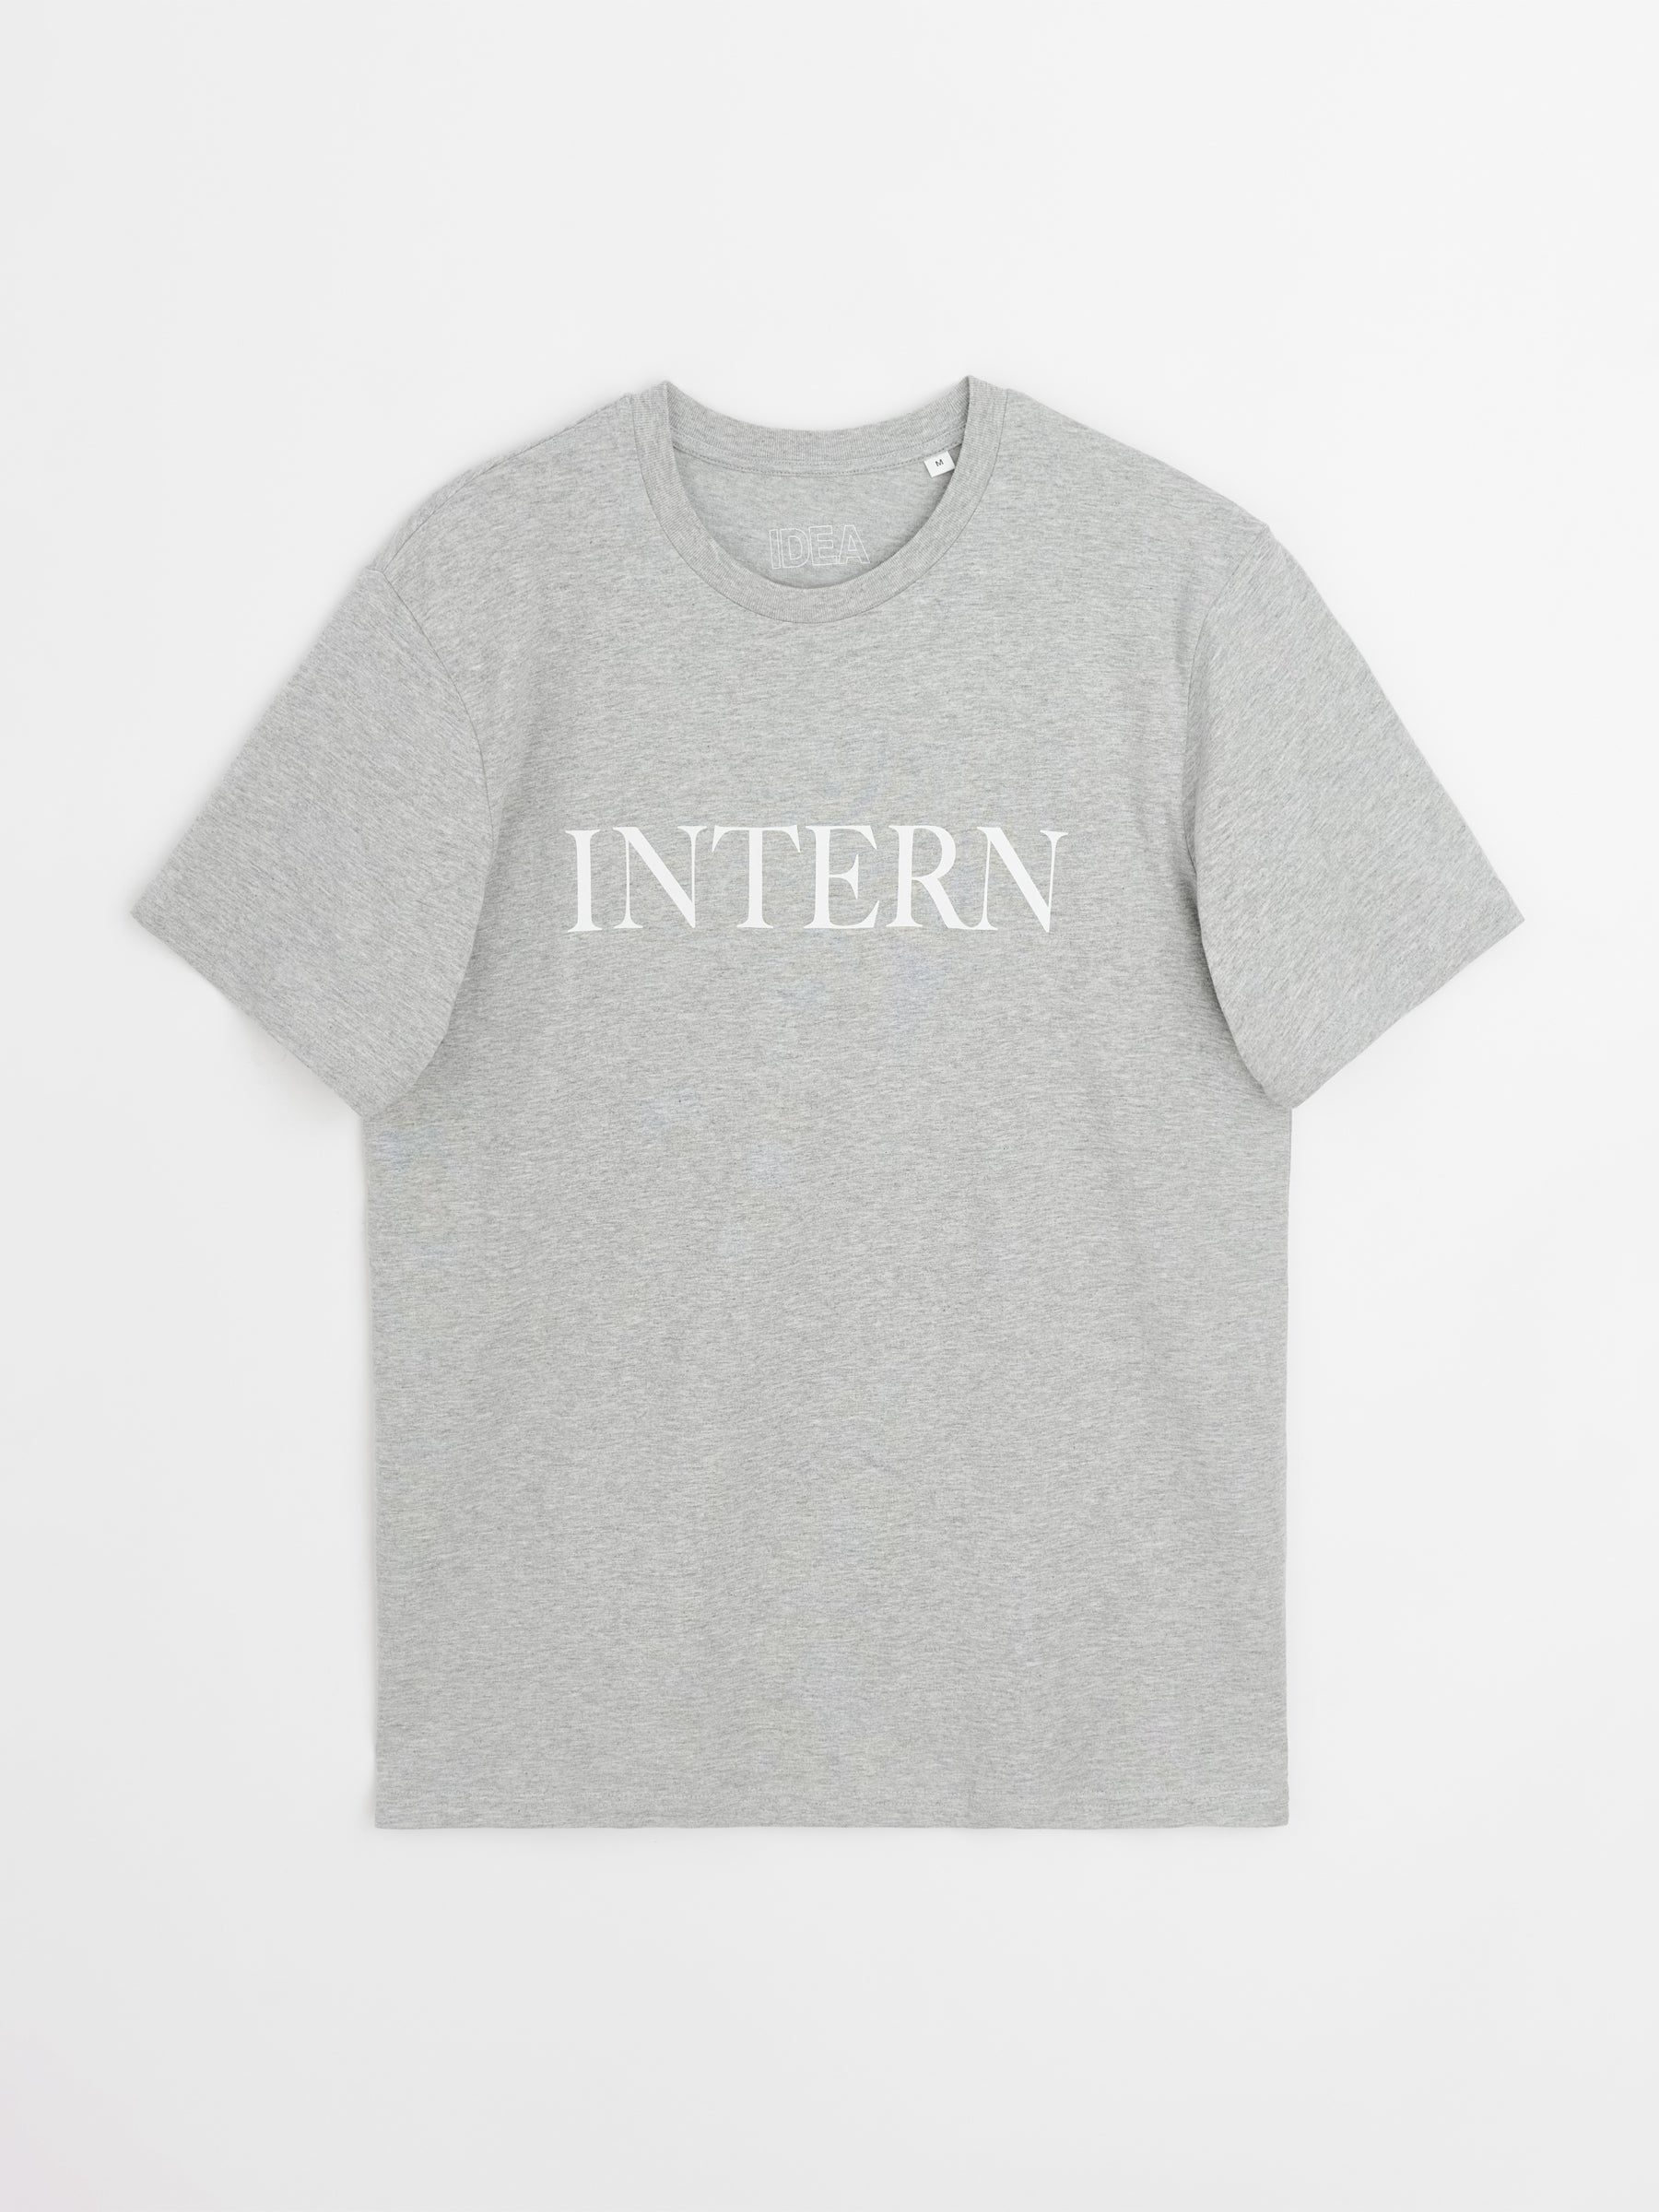 IDEA Intern T-shirt Grey